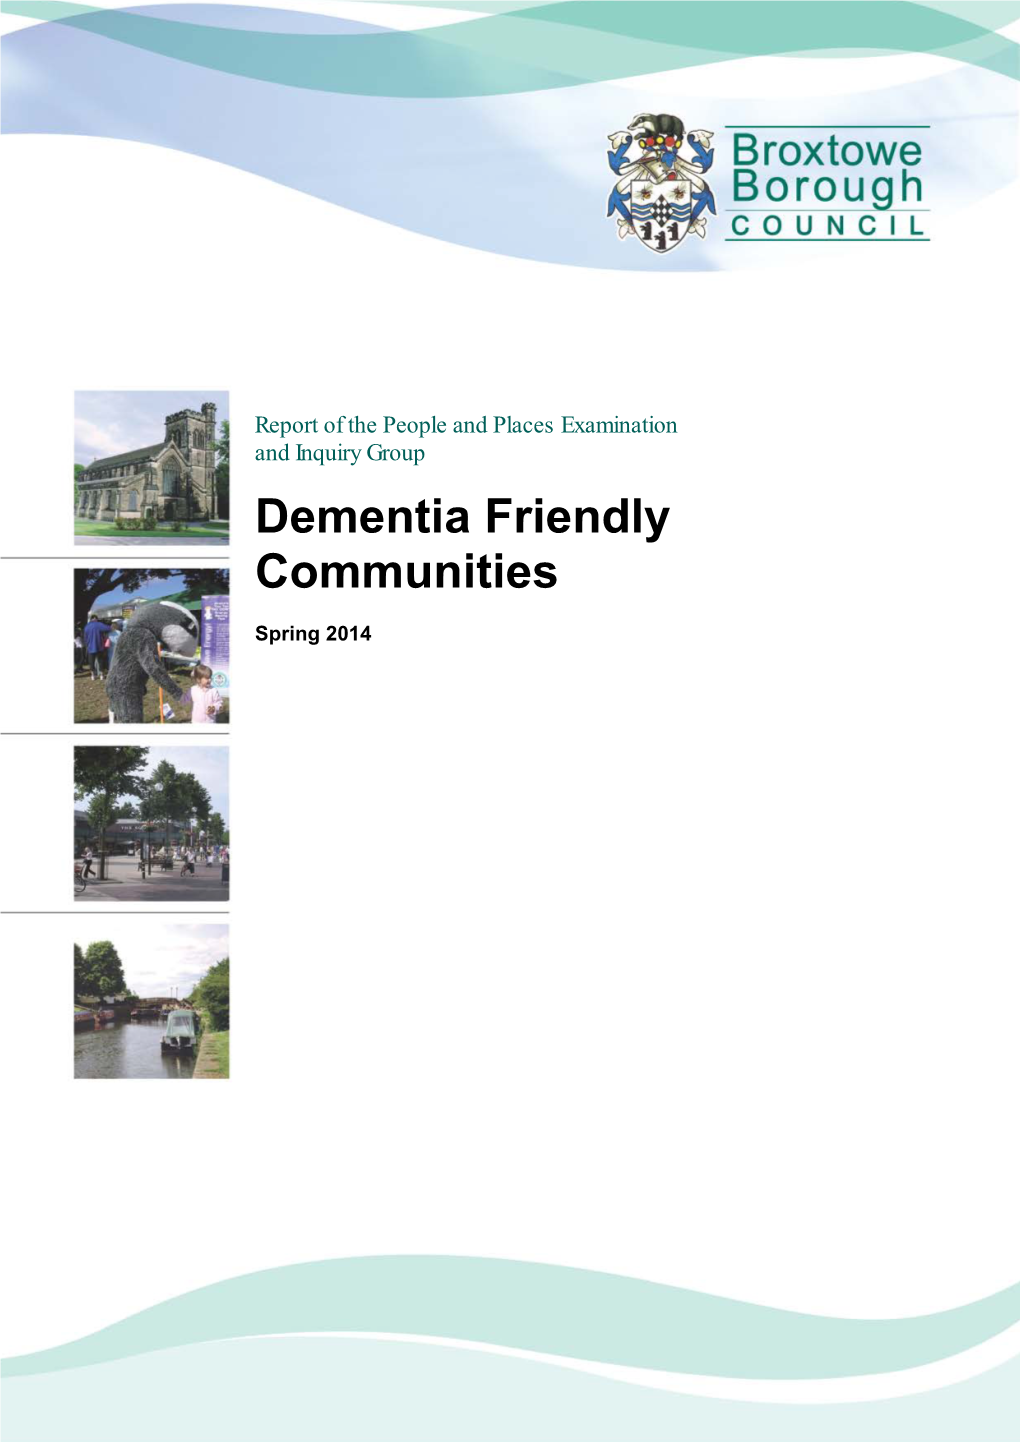 Dementia Friendly Communities Report